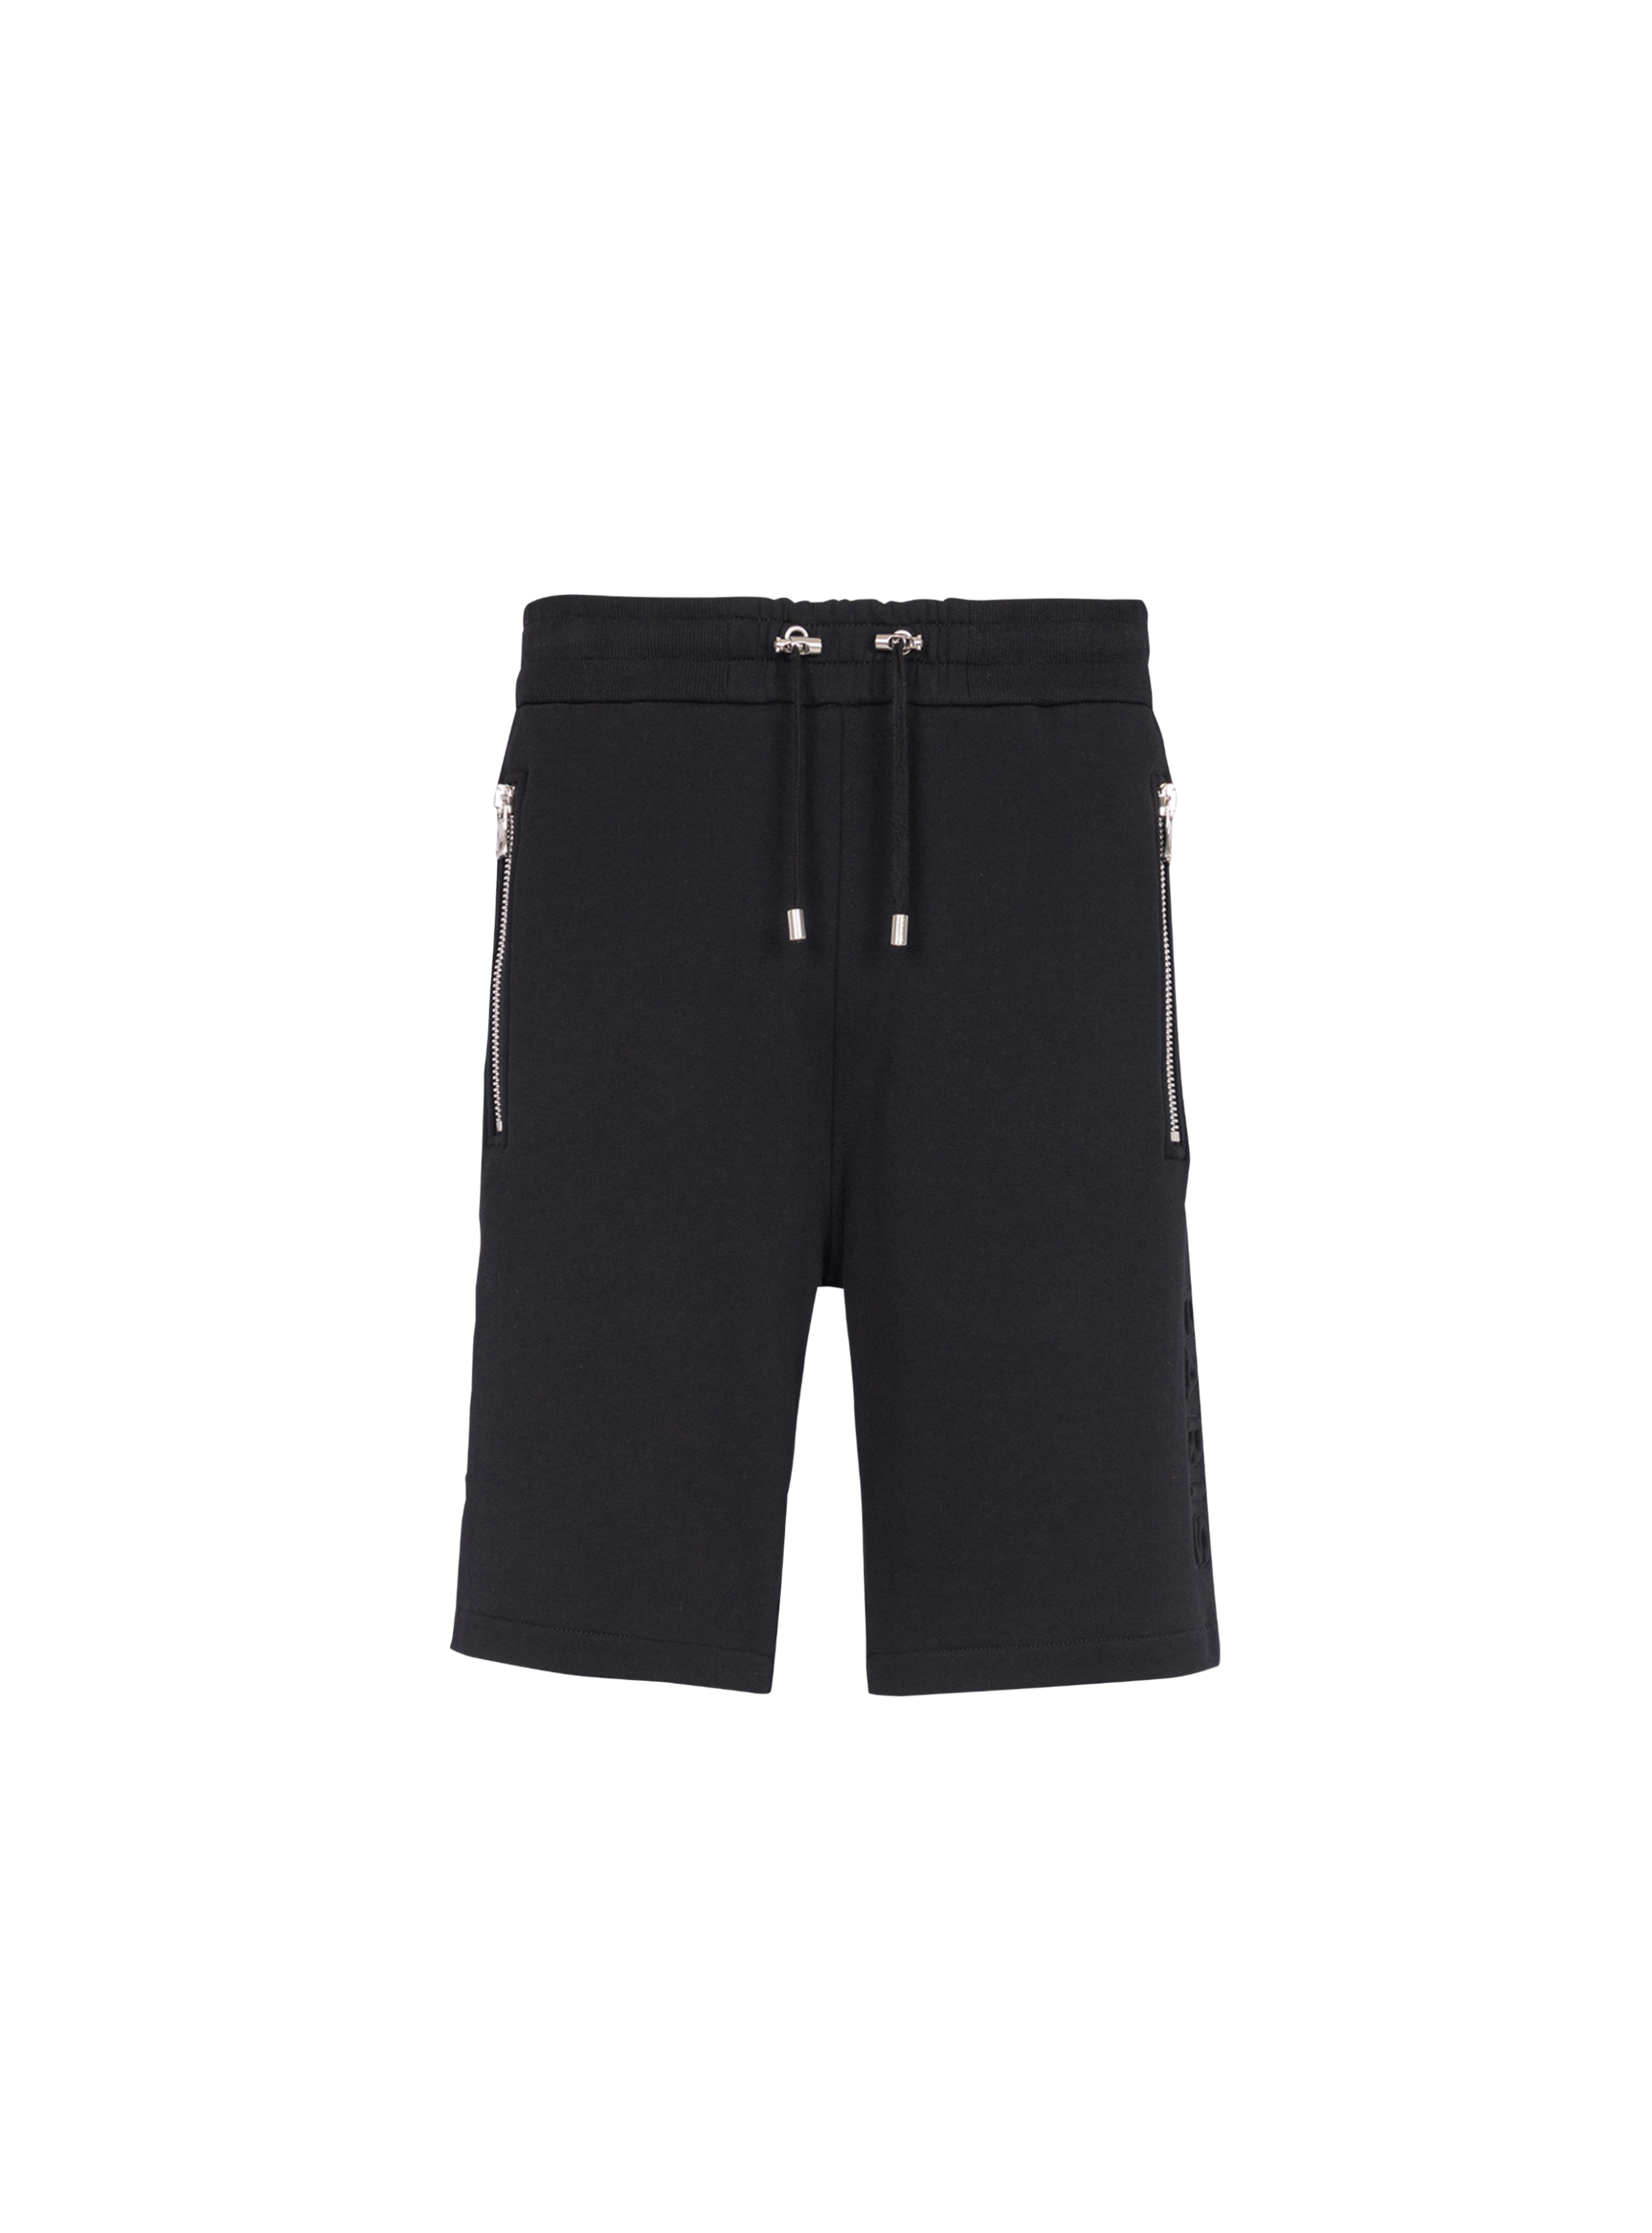 Cotton shorts with embossed Balmain logo, black